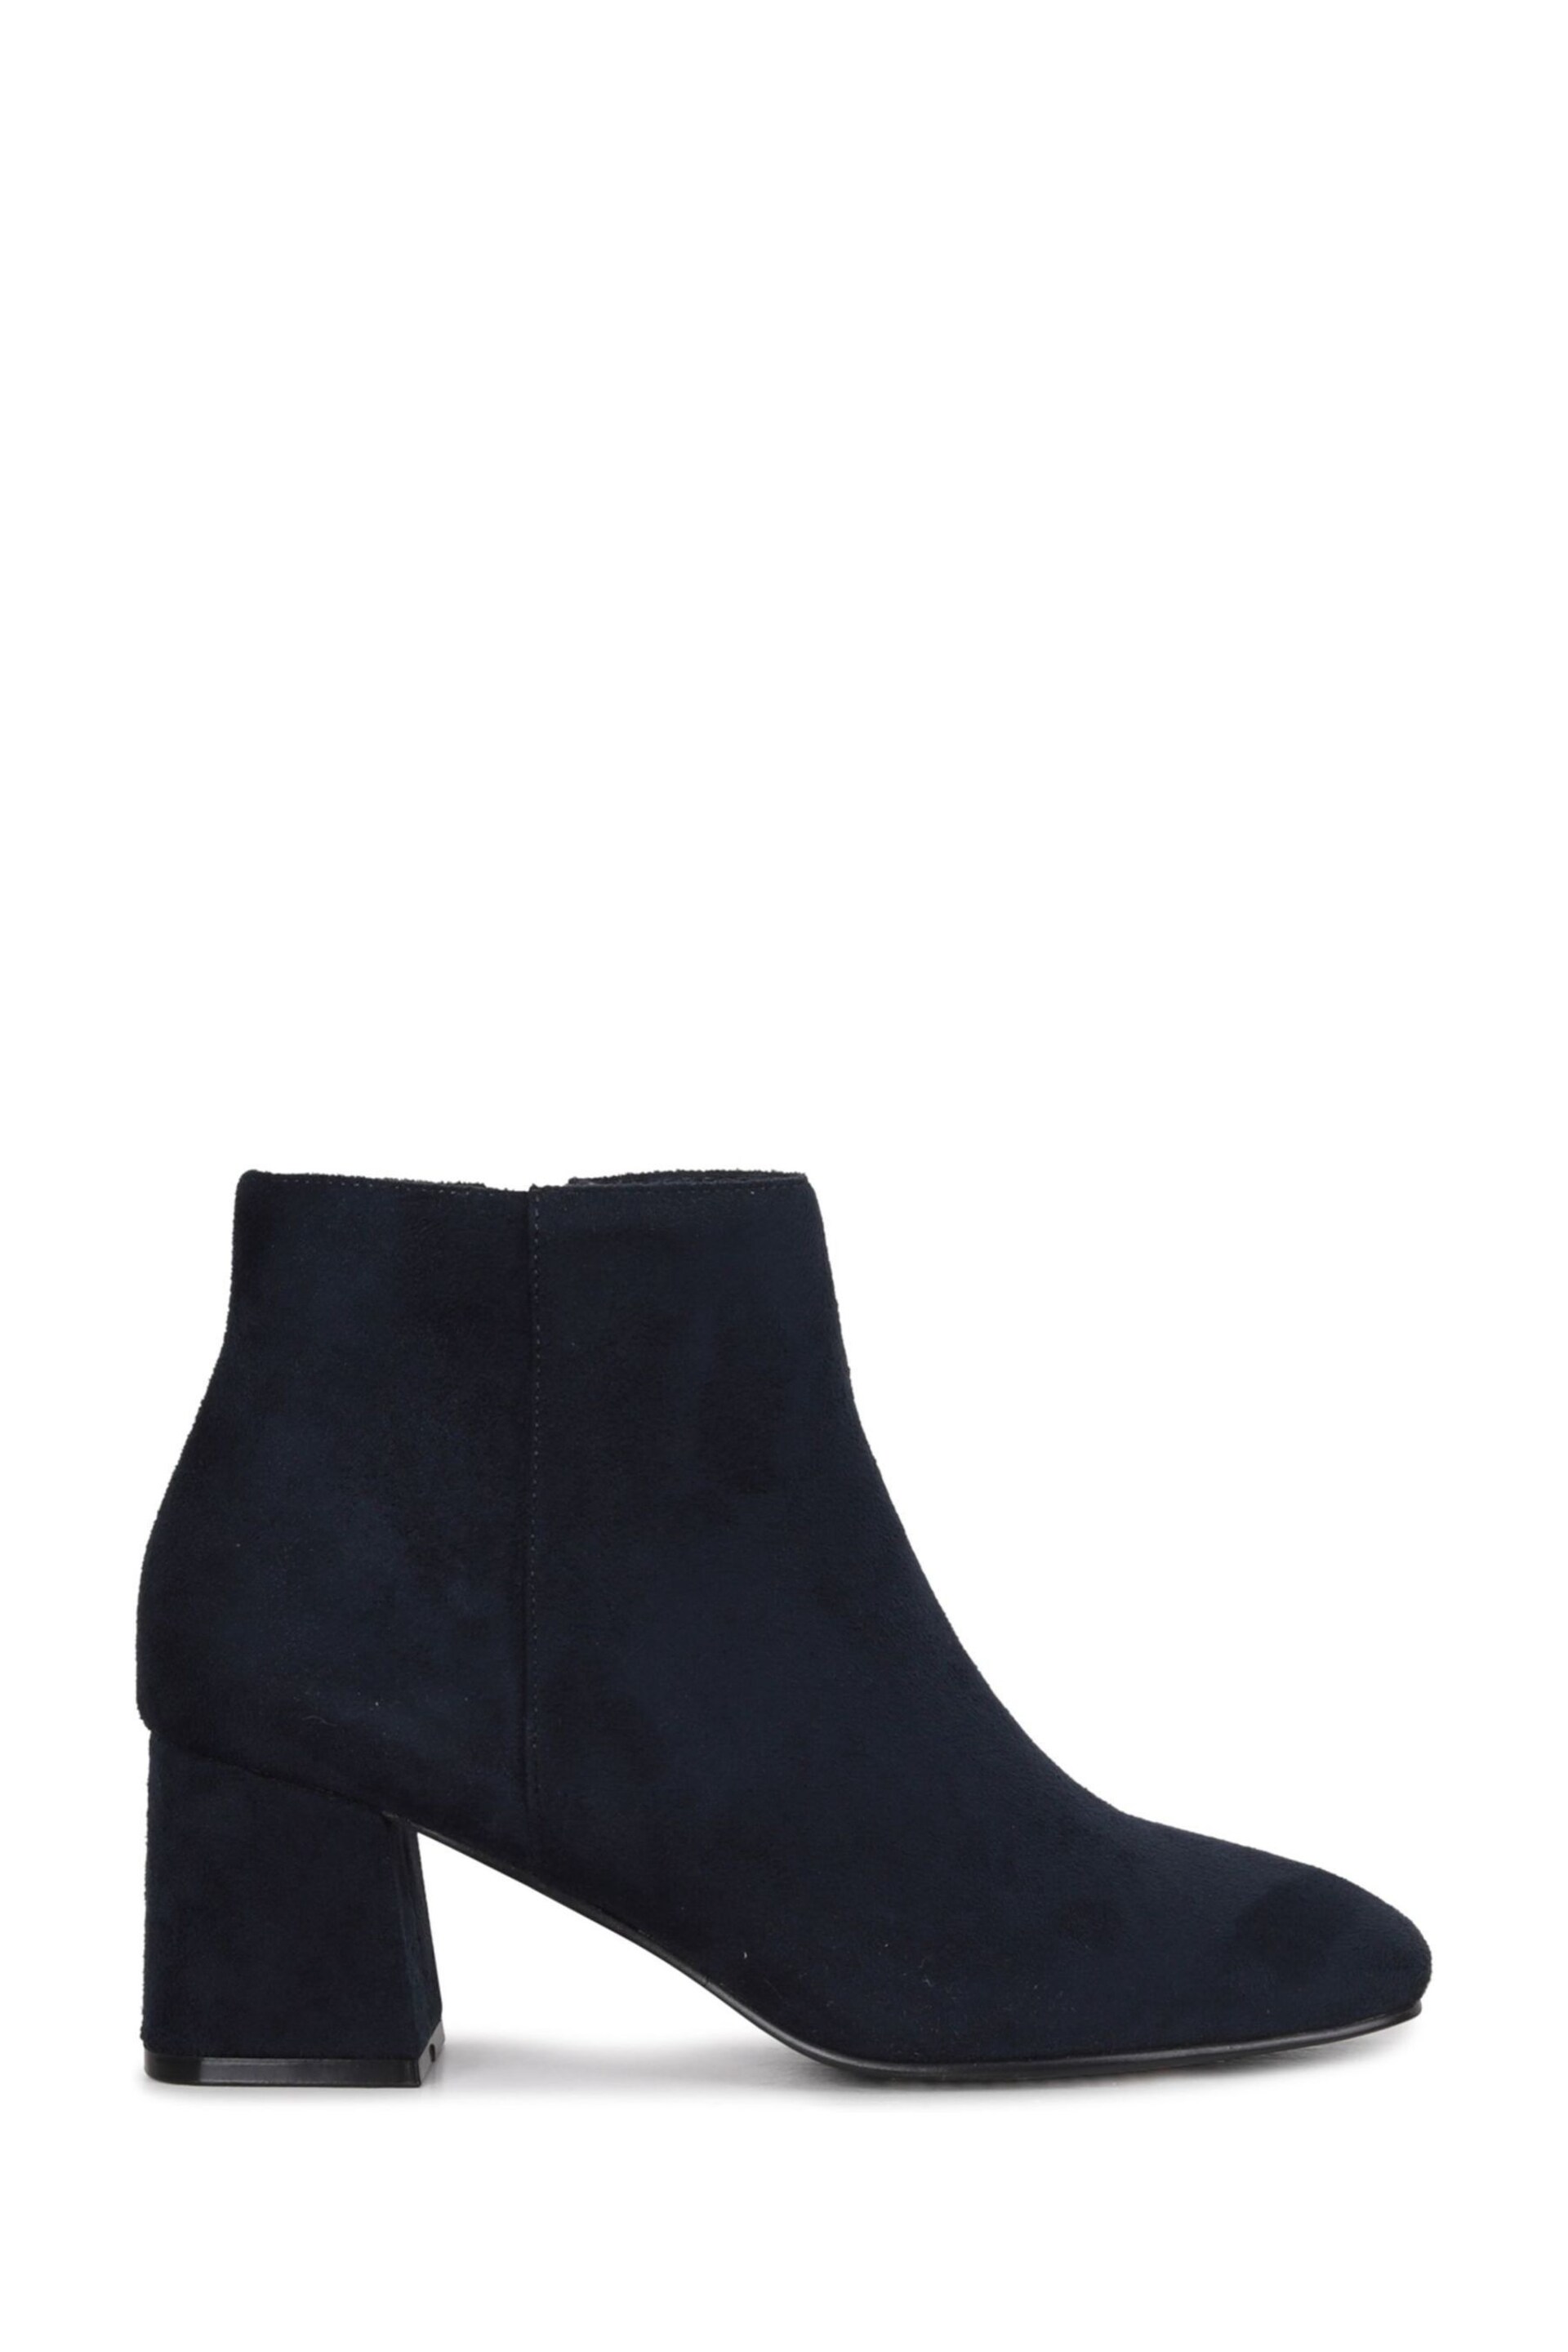 Linzi Blue Verse PU Block Heeled Ankle Boots - Image 3 of 5